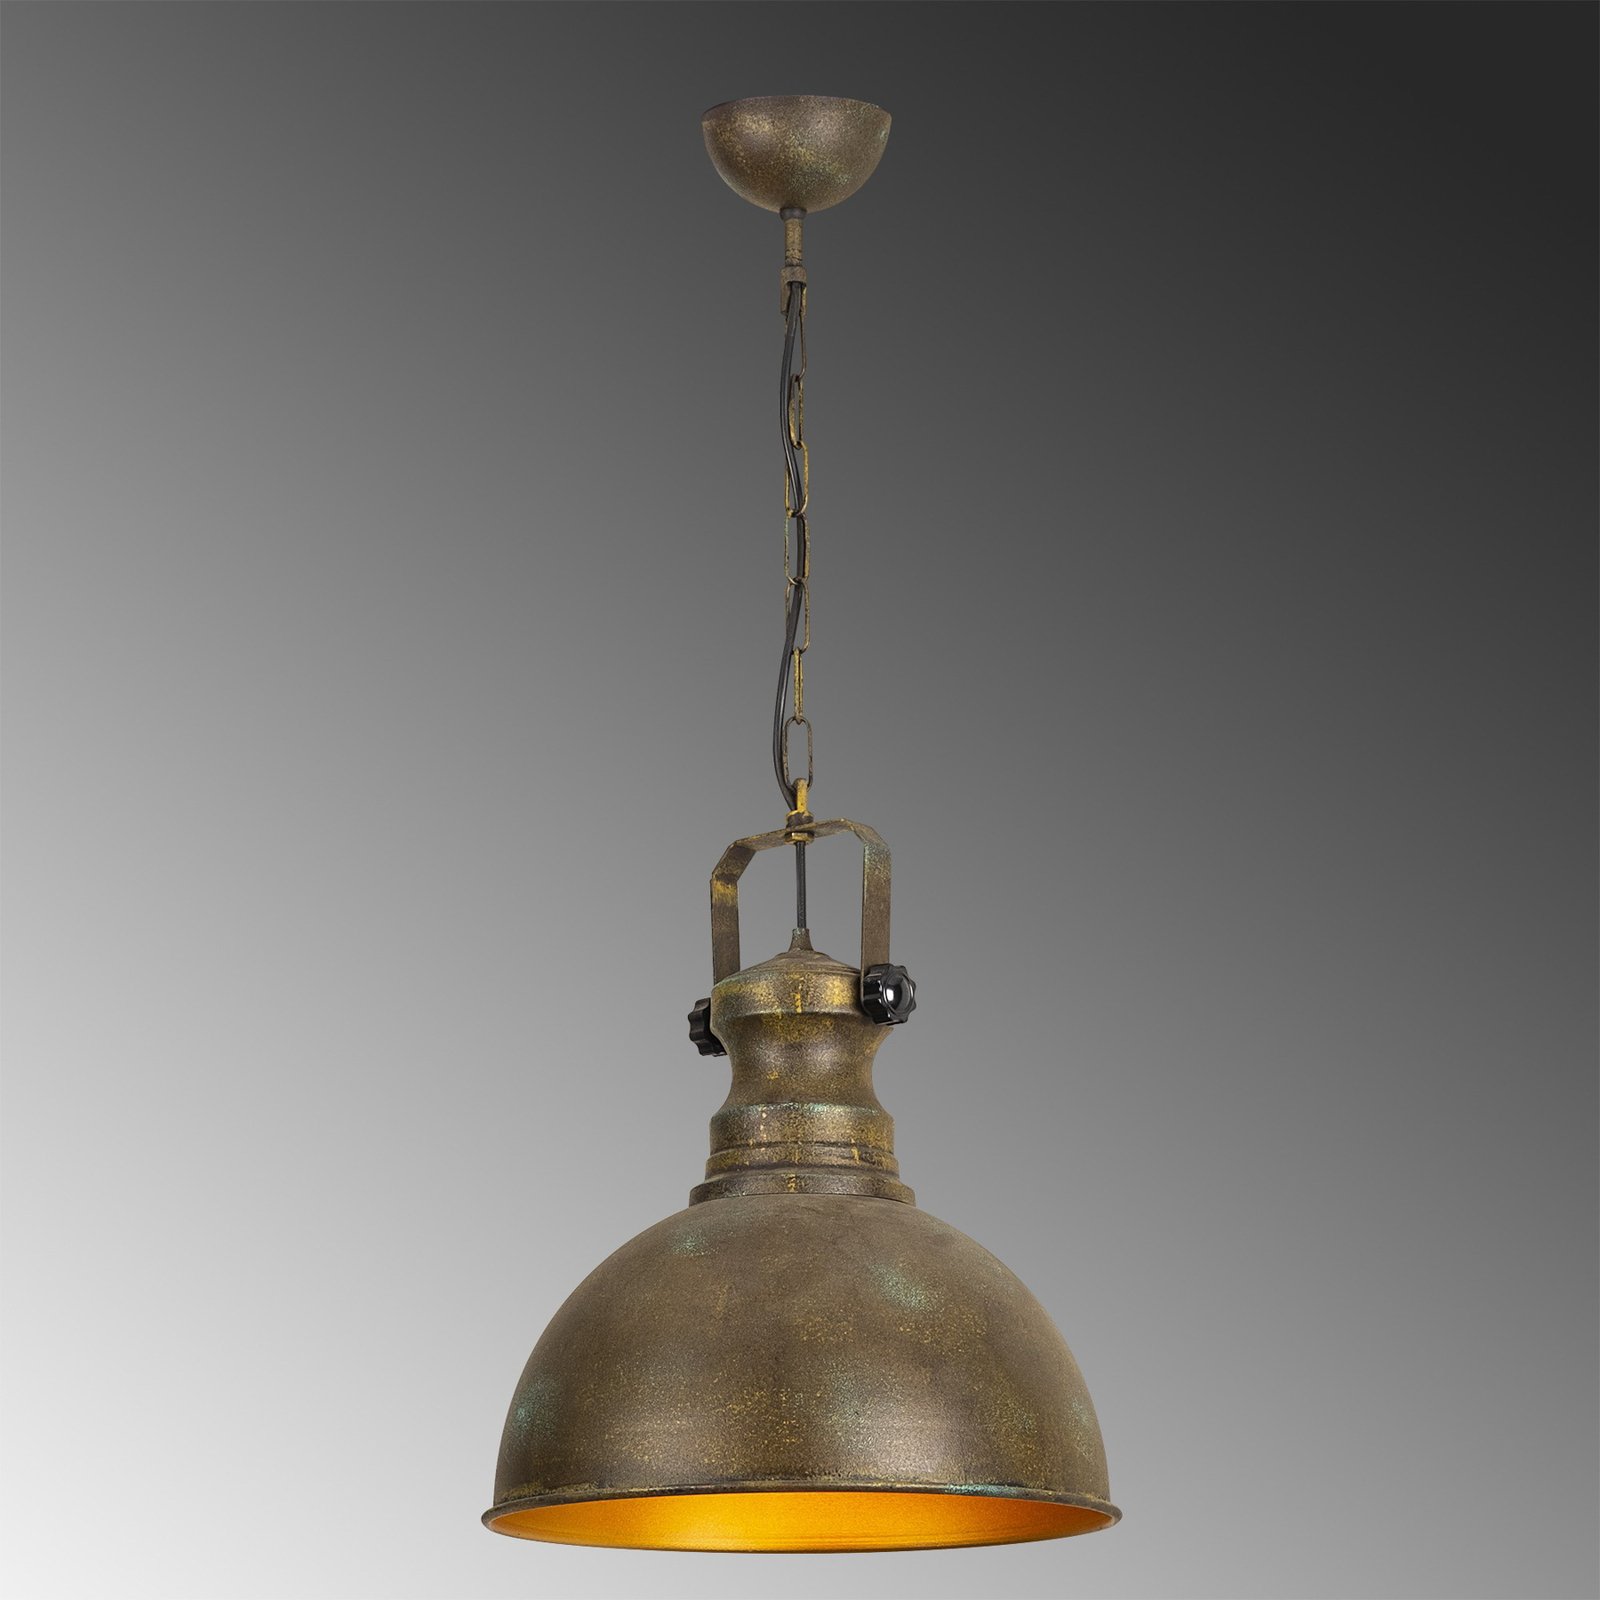 Hanglamp Saglam 3710 1-lamp Ø31cm goud antiek